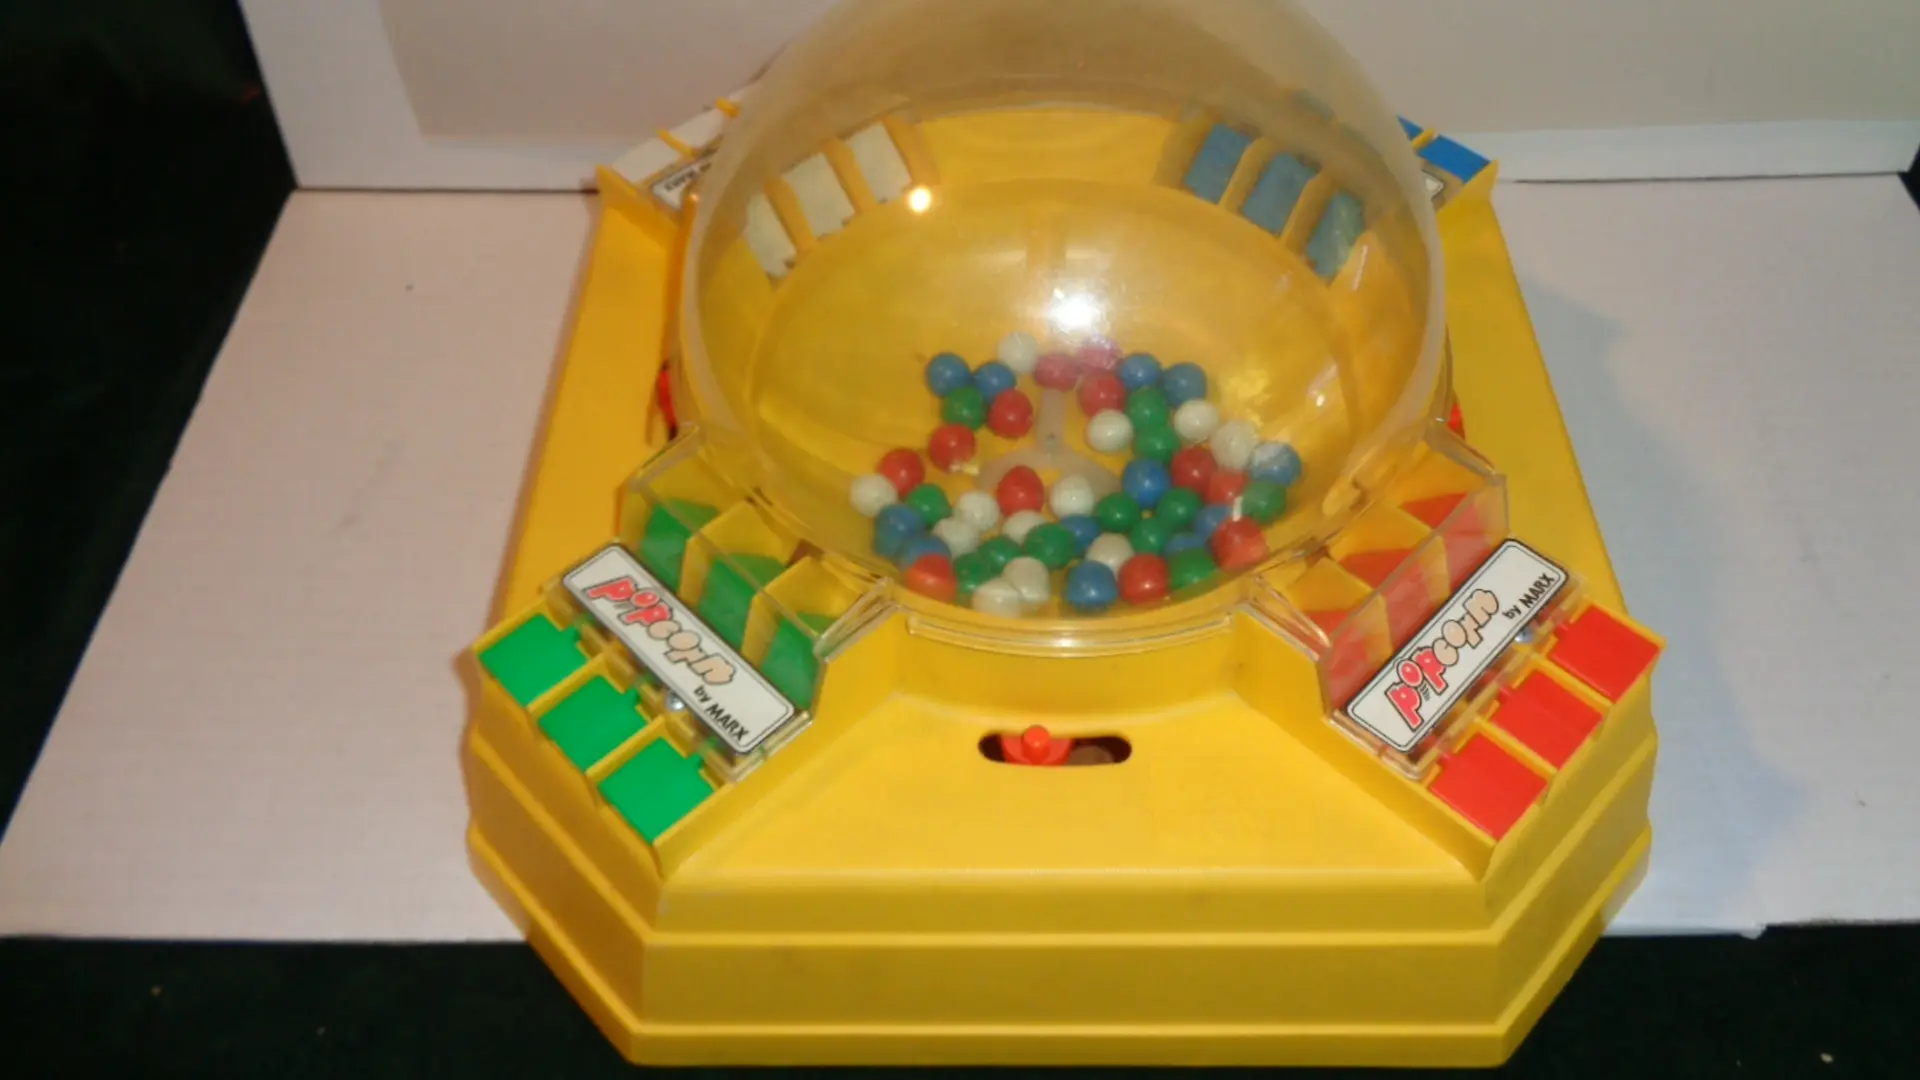 Display of Table Top Popcorn Machine Game set